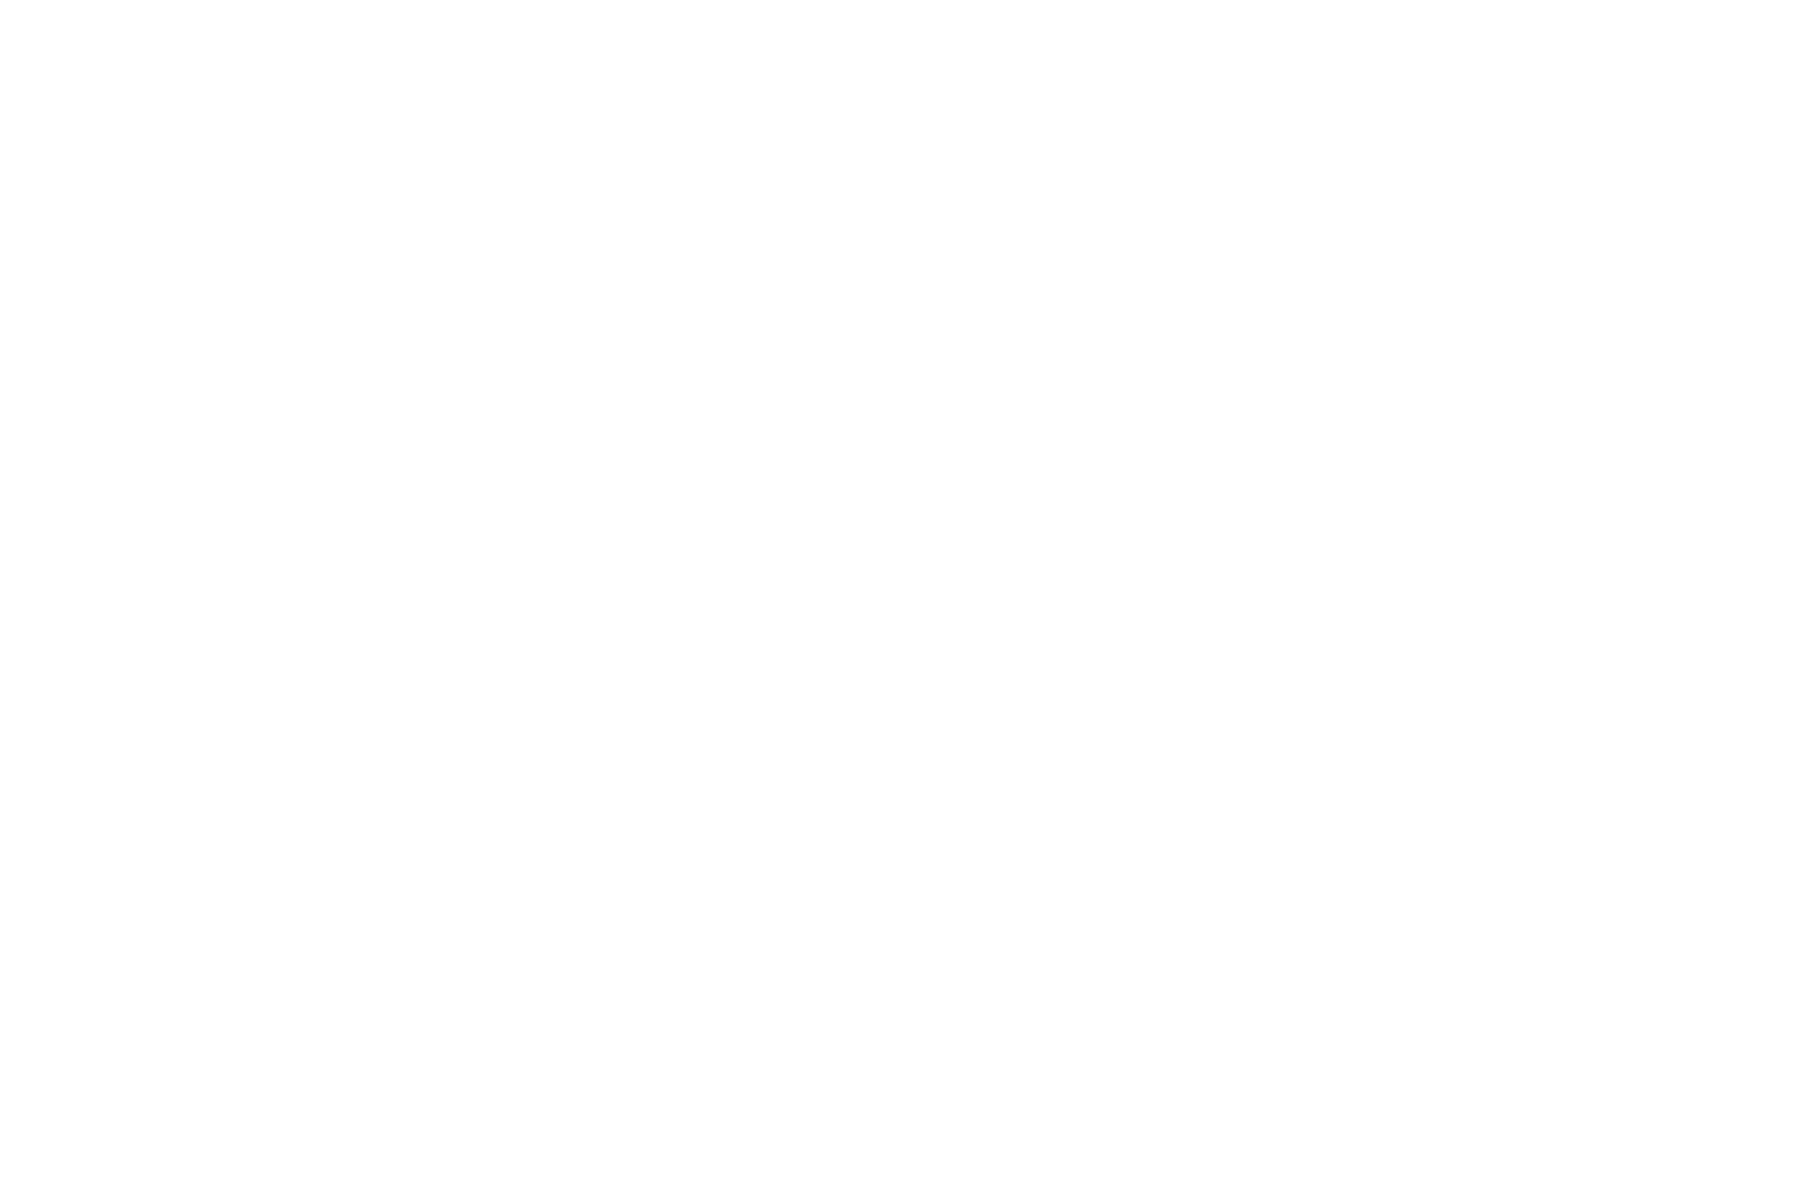 Kunde Condor | TYPO3 Agentur Münster